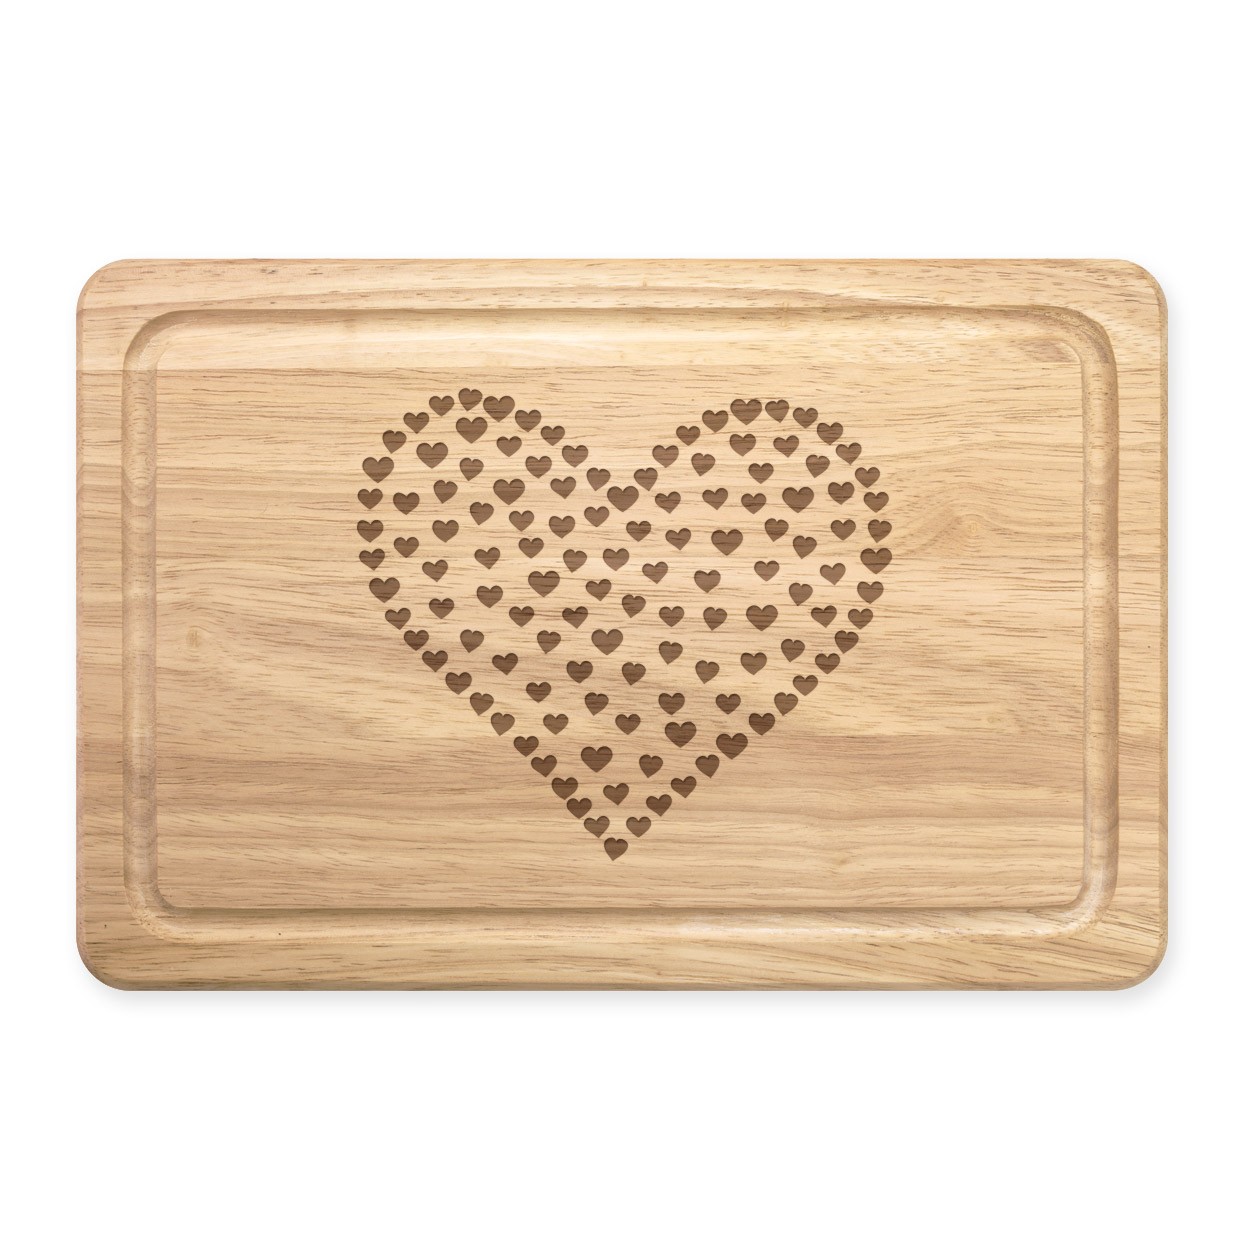 Heart Of Hearts Rectangular Wooden Chopping Board